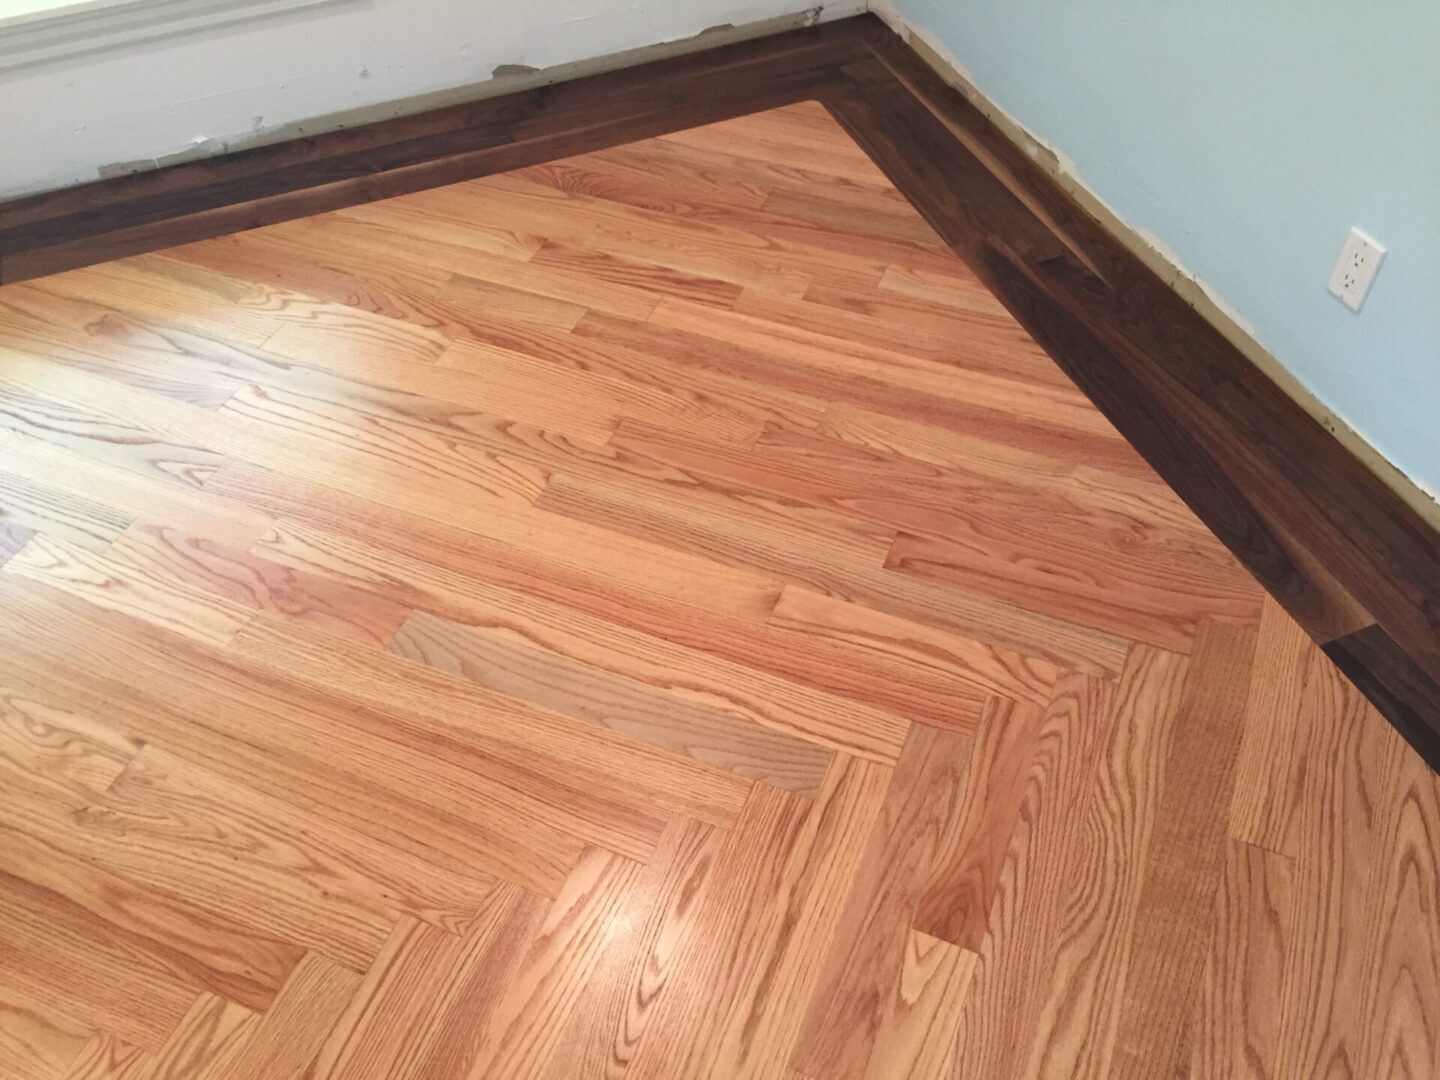 Red oak floor with walnut border